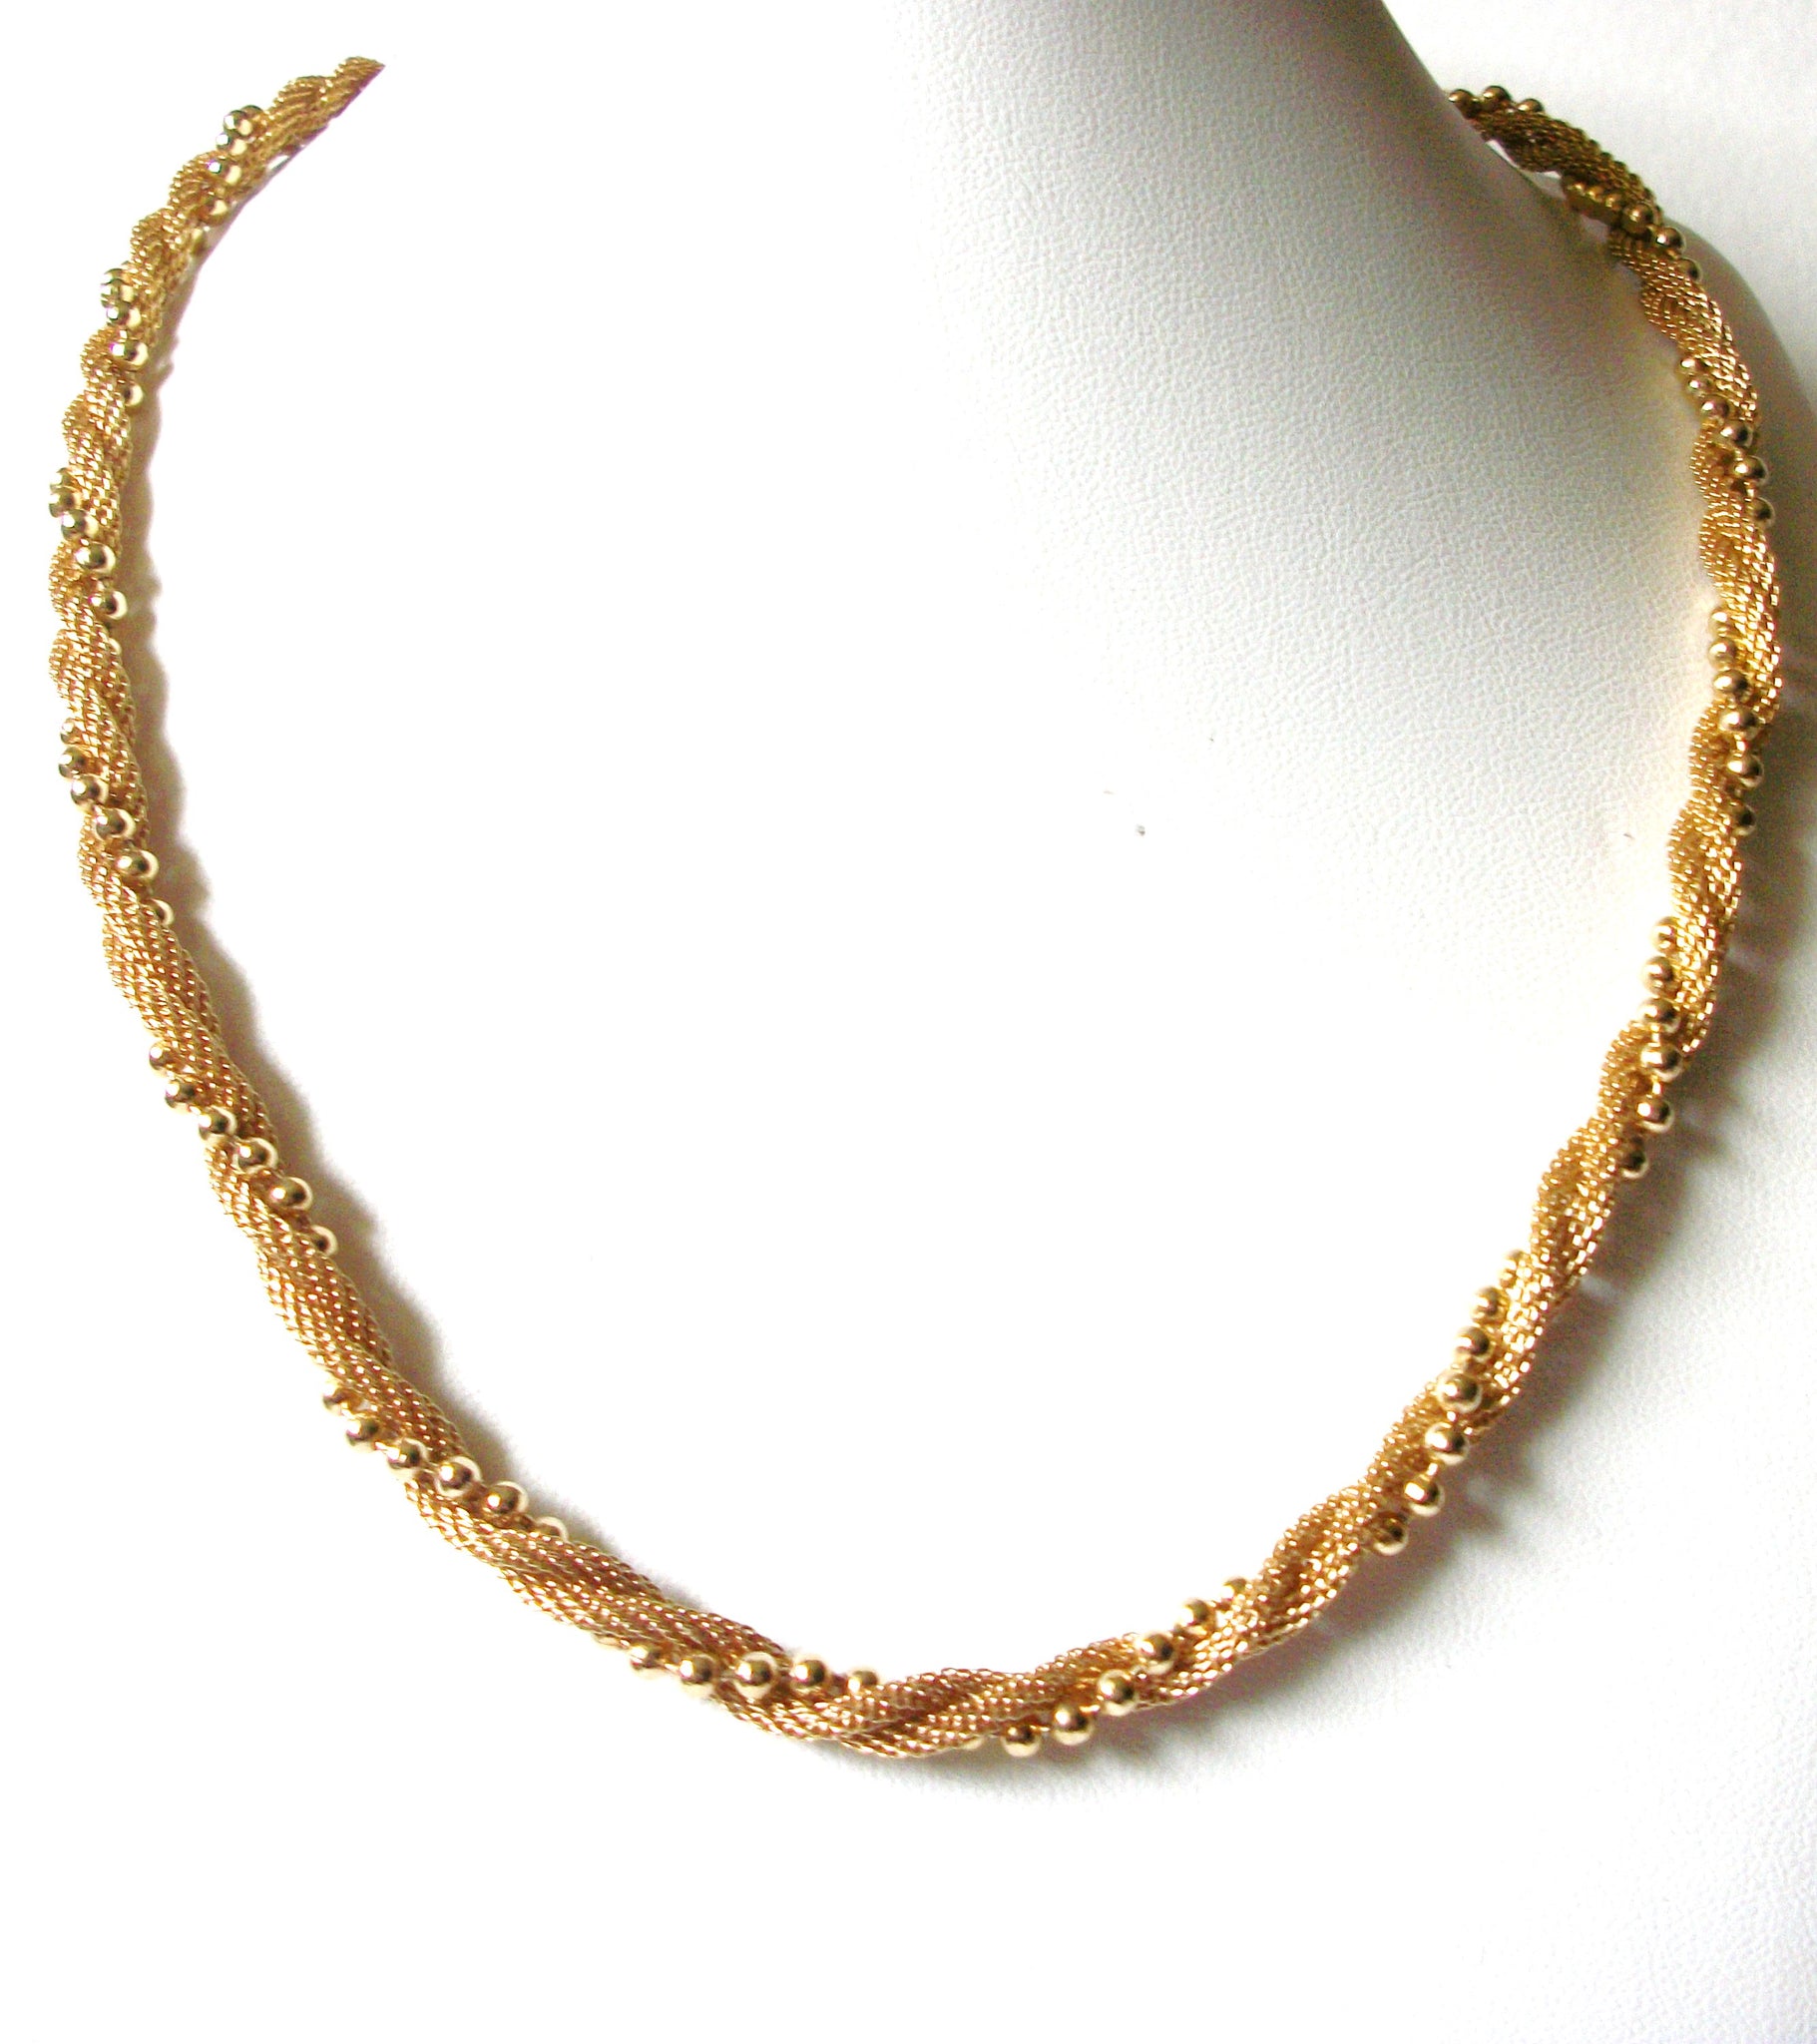 AVON 1980s Vintage Gold Toned Necklace 80520